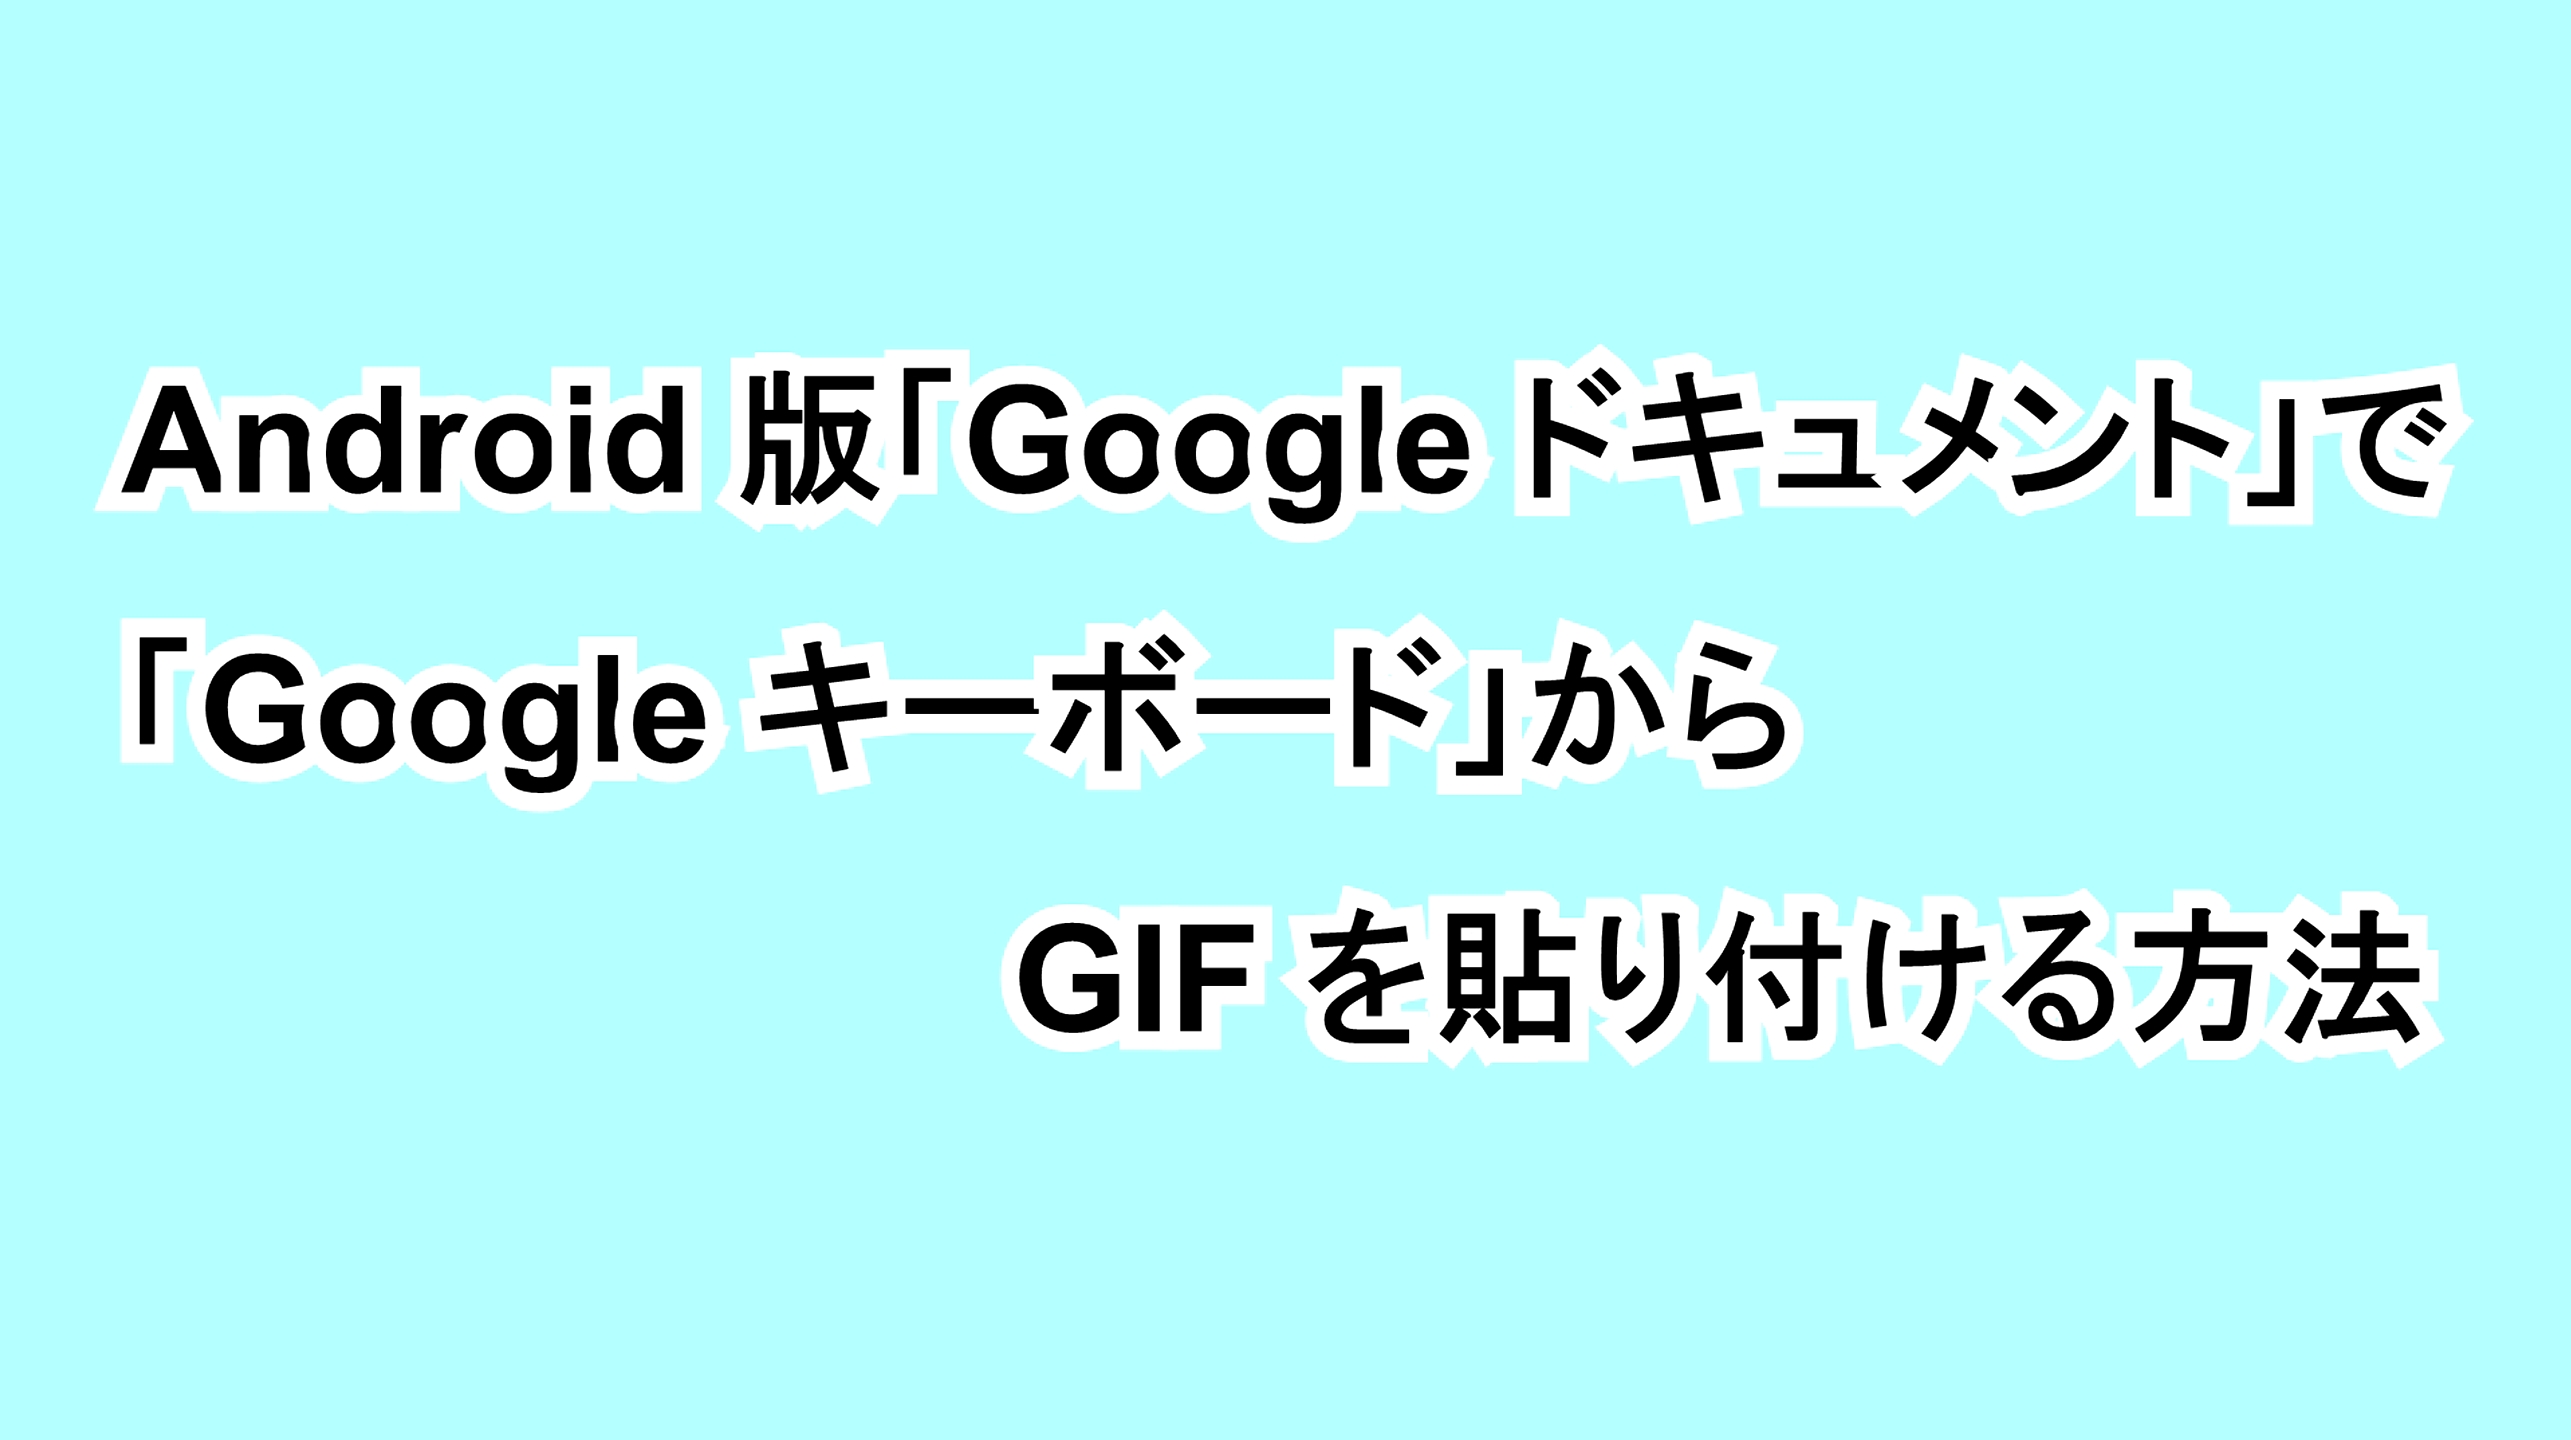 Android版「Google ドキュメント」で「Google キーボード」からGIFを貼り付ける方法